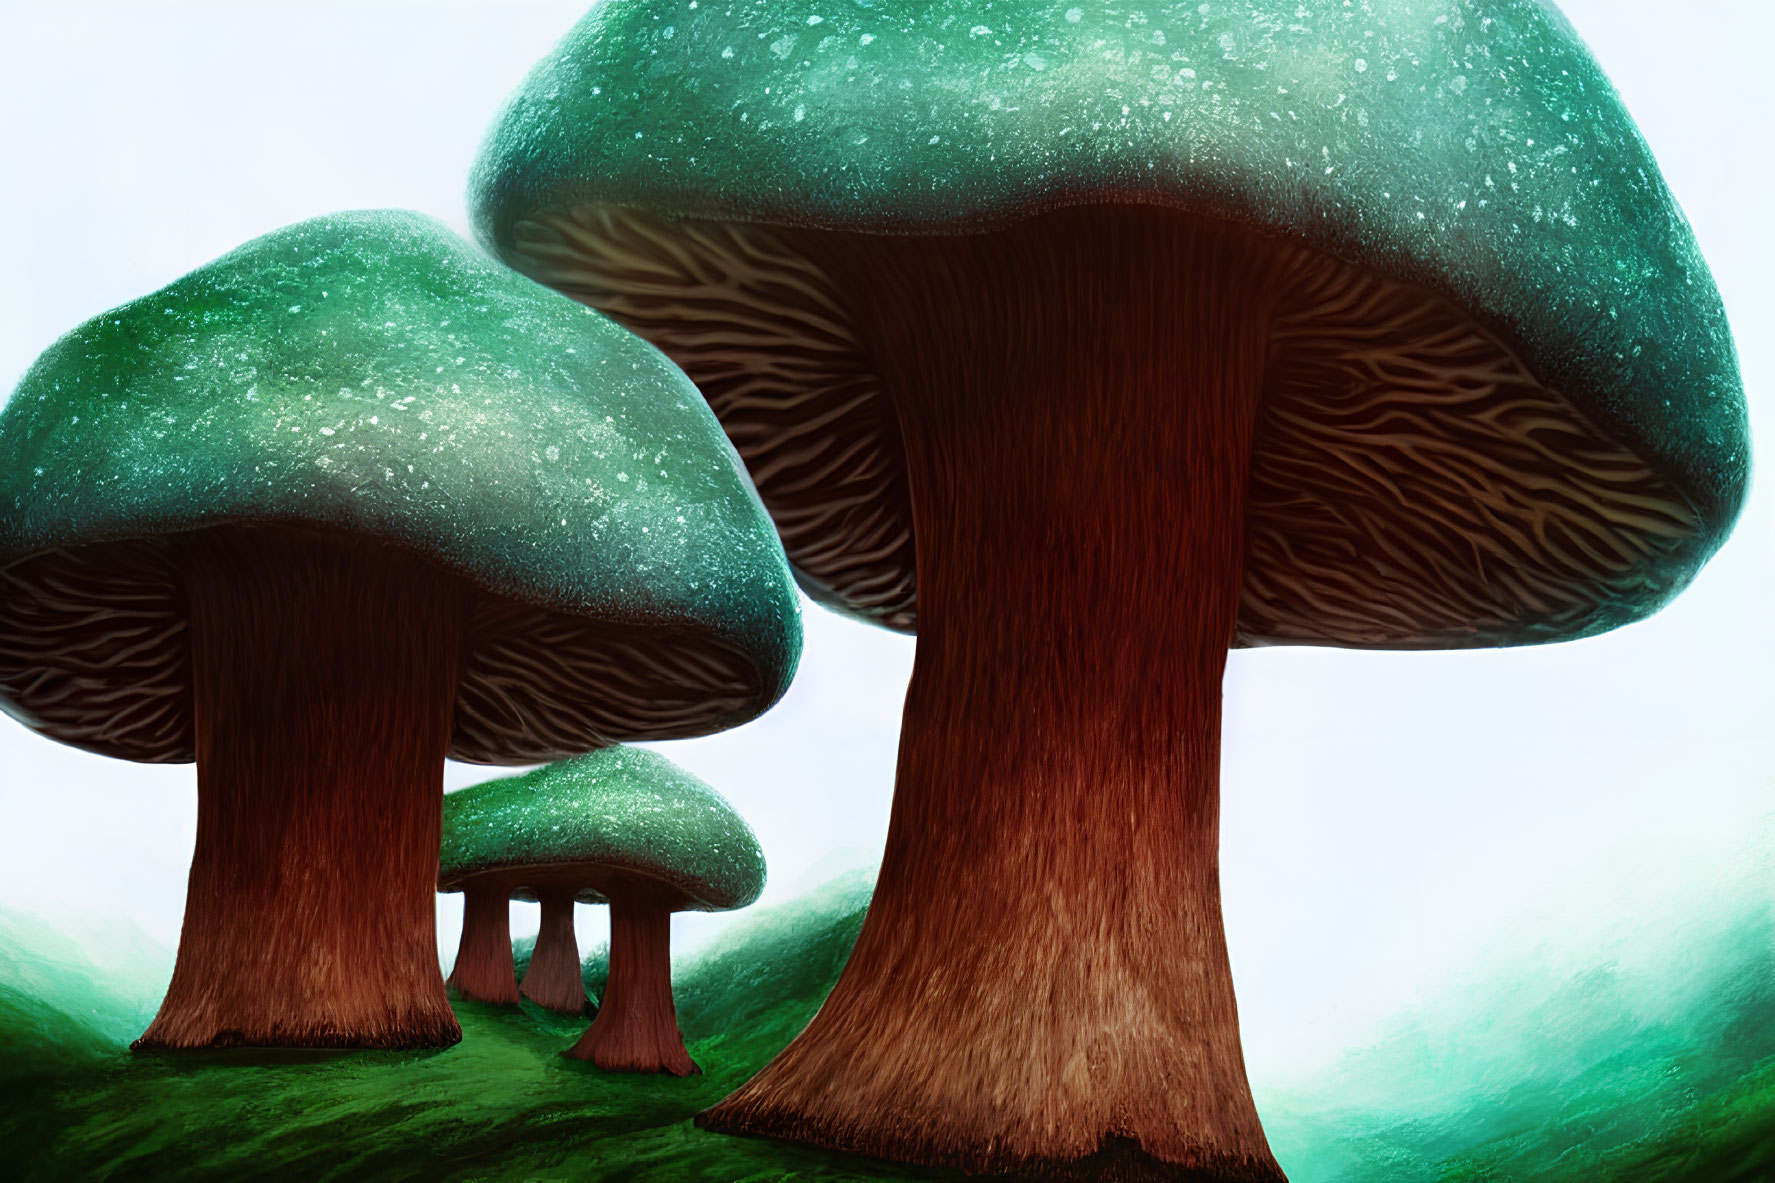 Fantasy illustration of oversized mushrooms in foggy setting